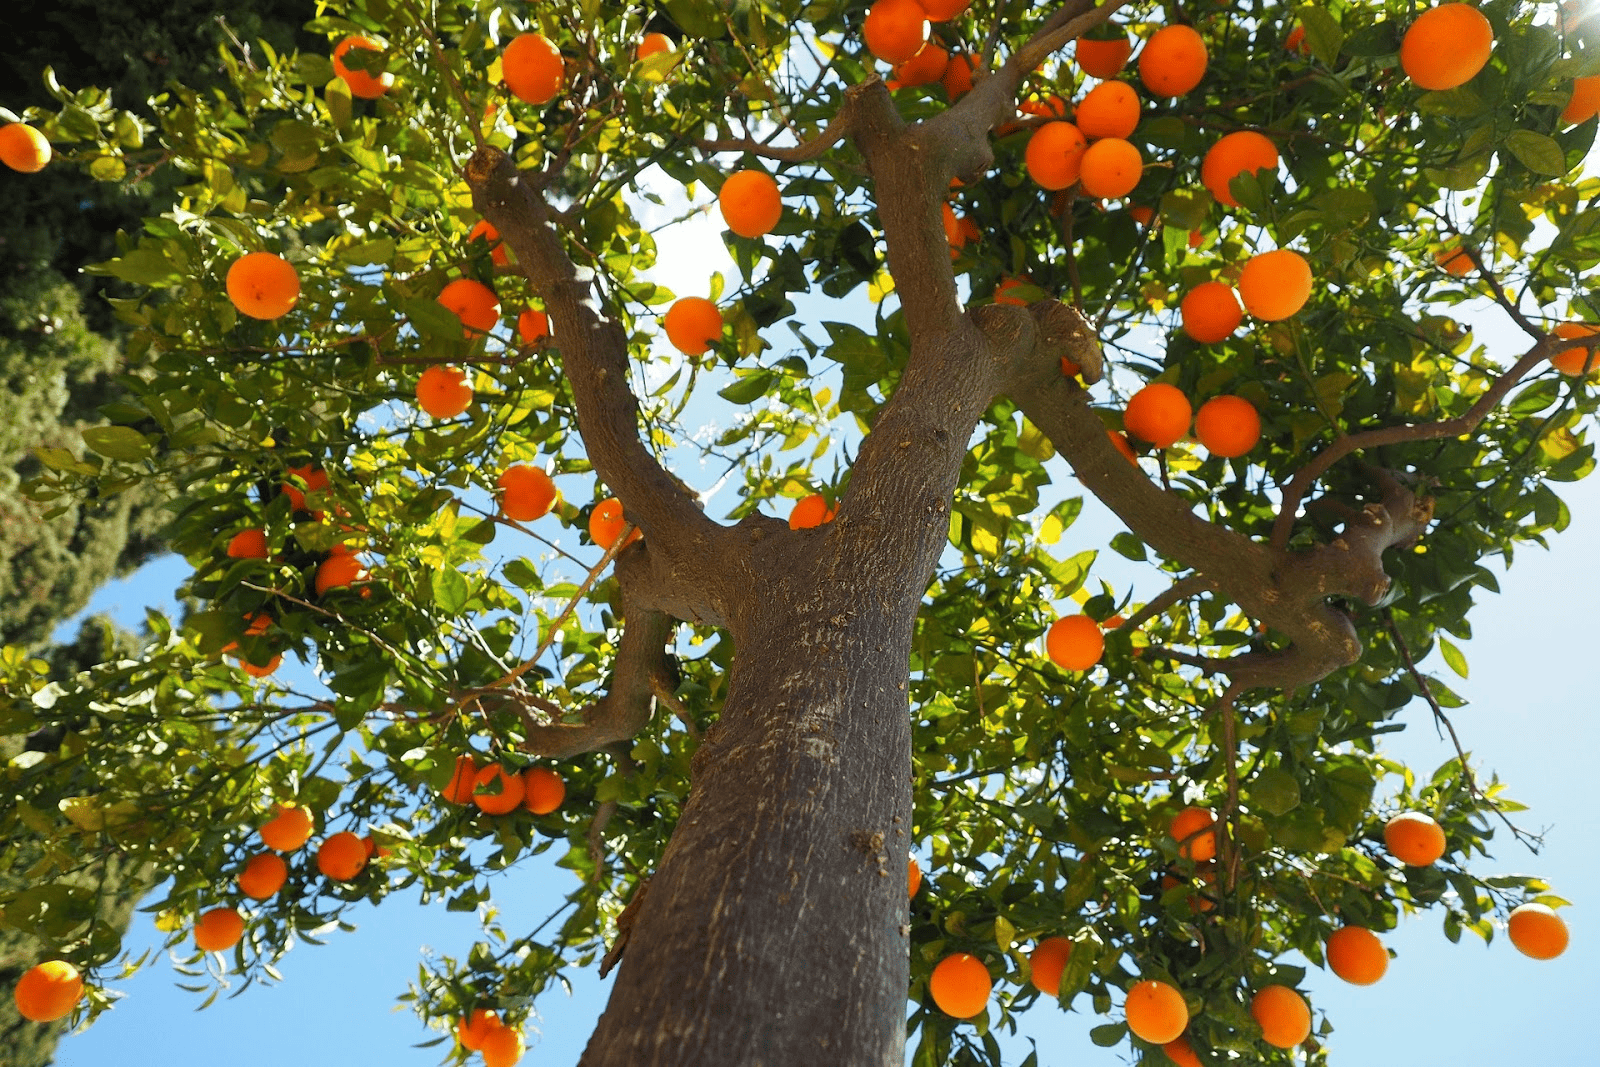 Fruit Trees Vs Non-Fruit Trees